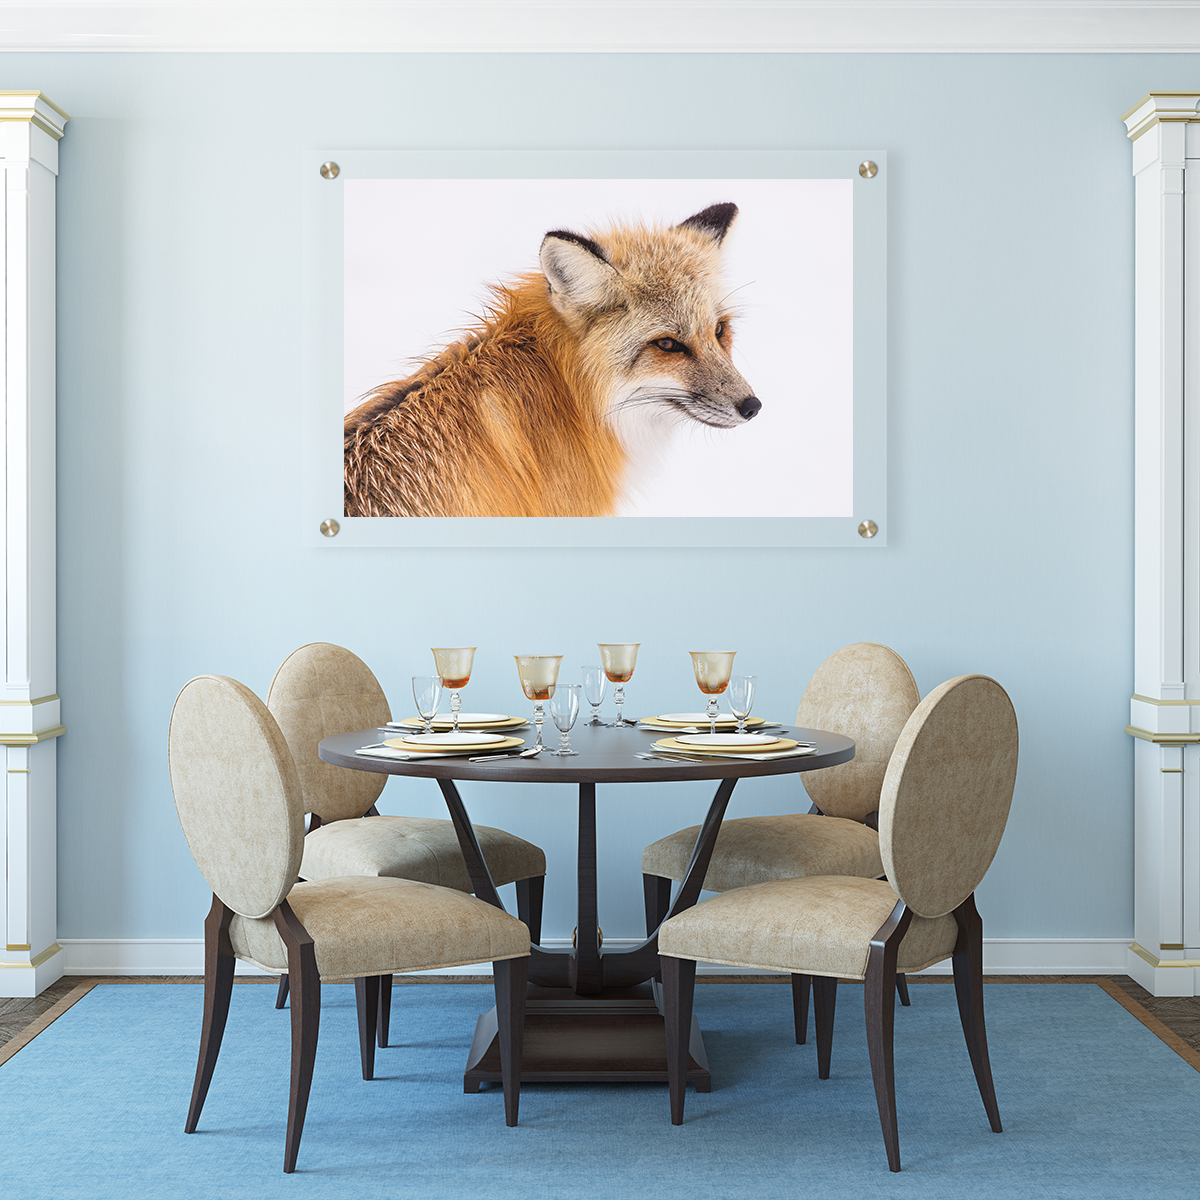 Custom Plexiglass Fox in Dining Room